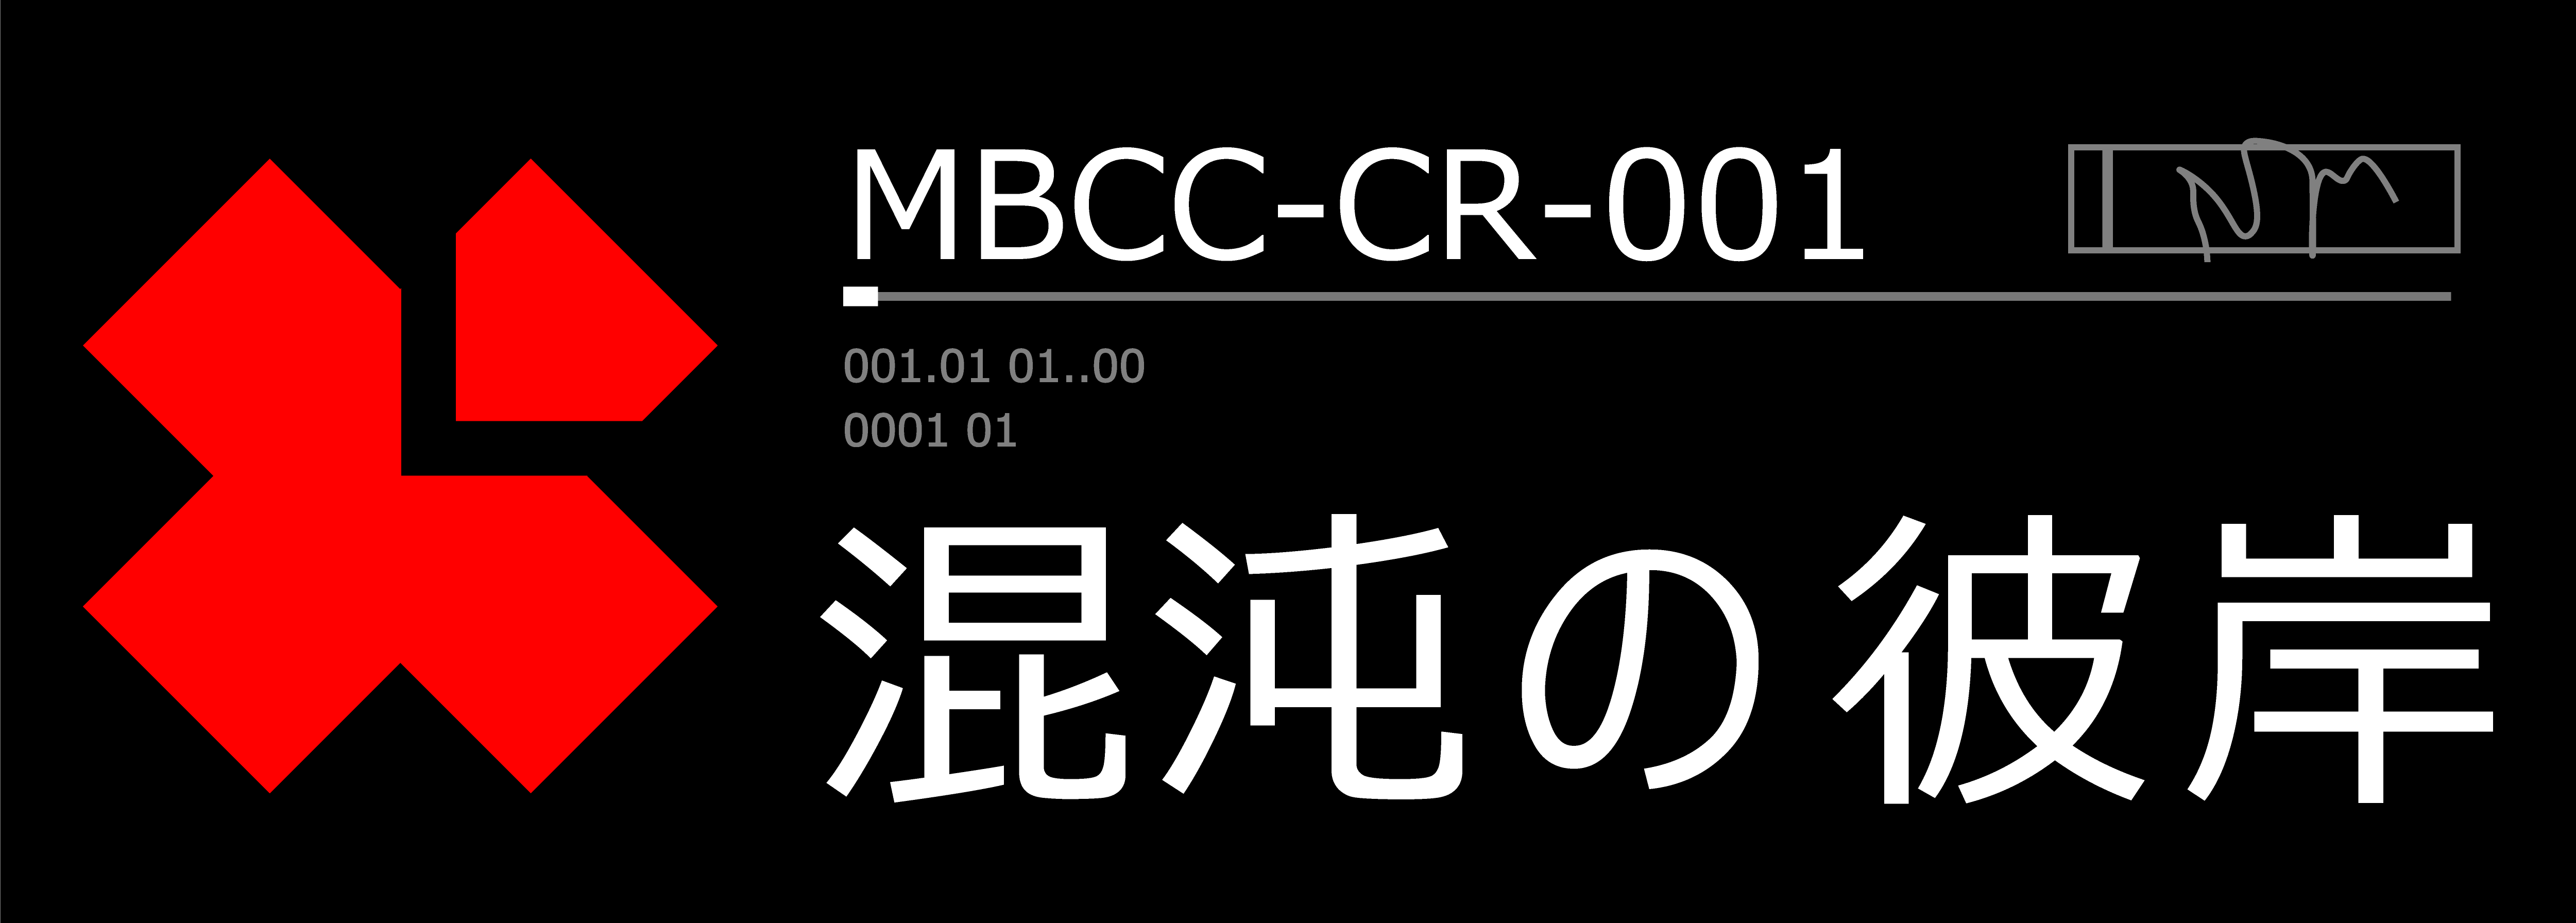 MBCC-CR-001.png